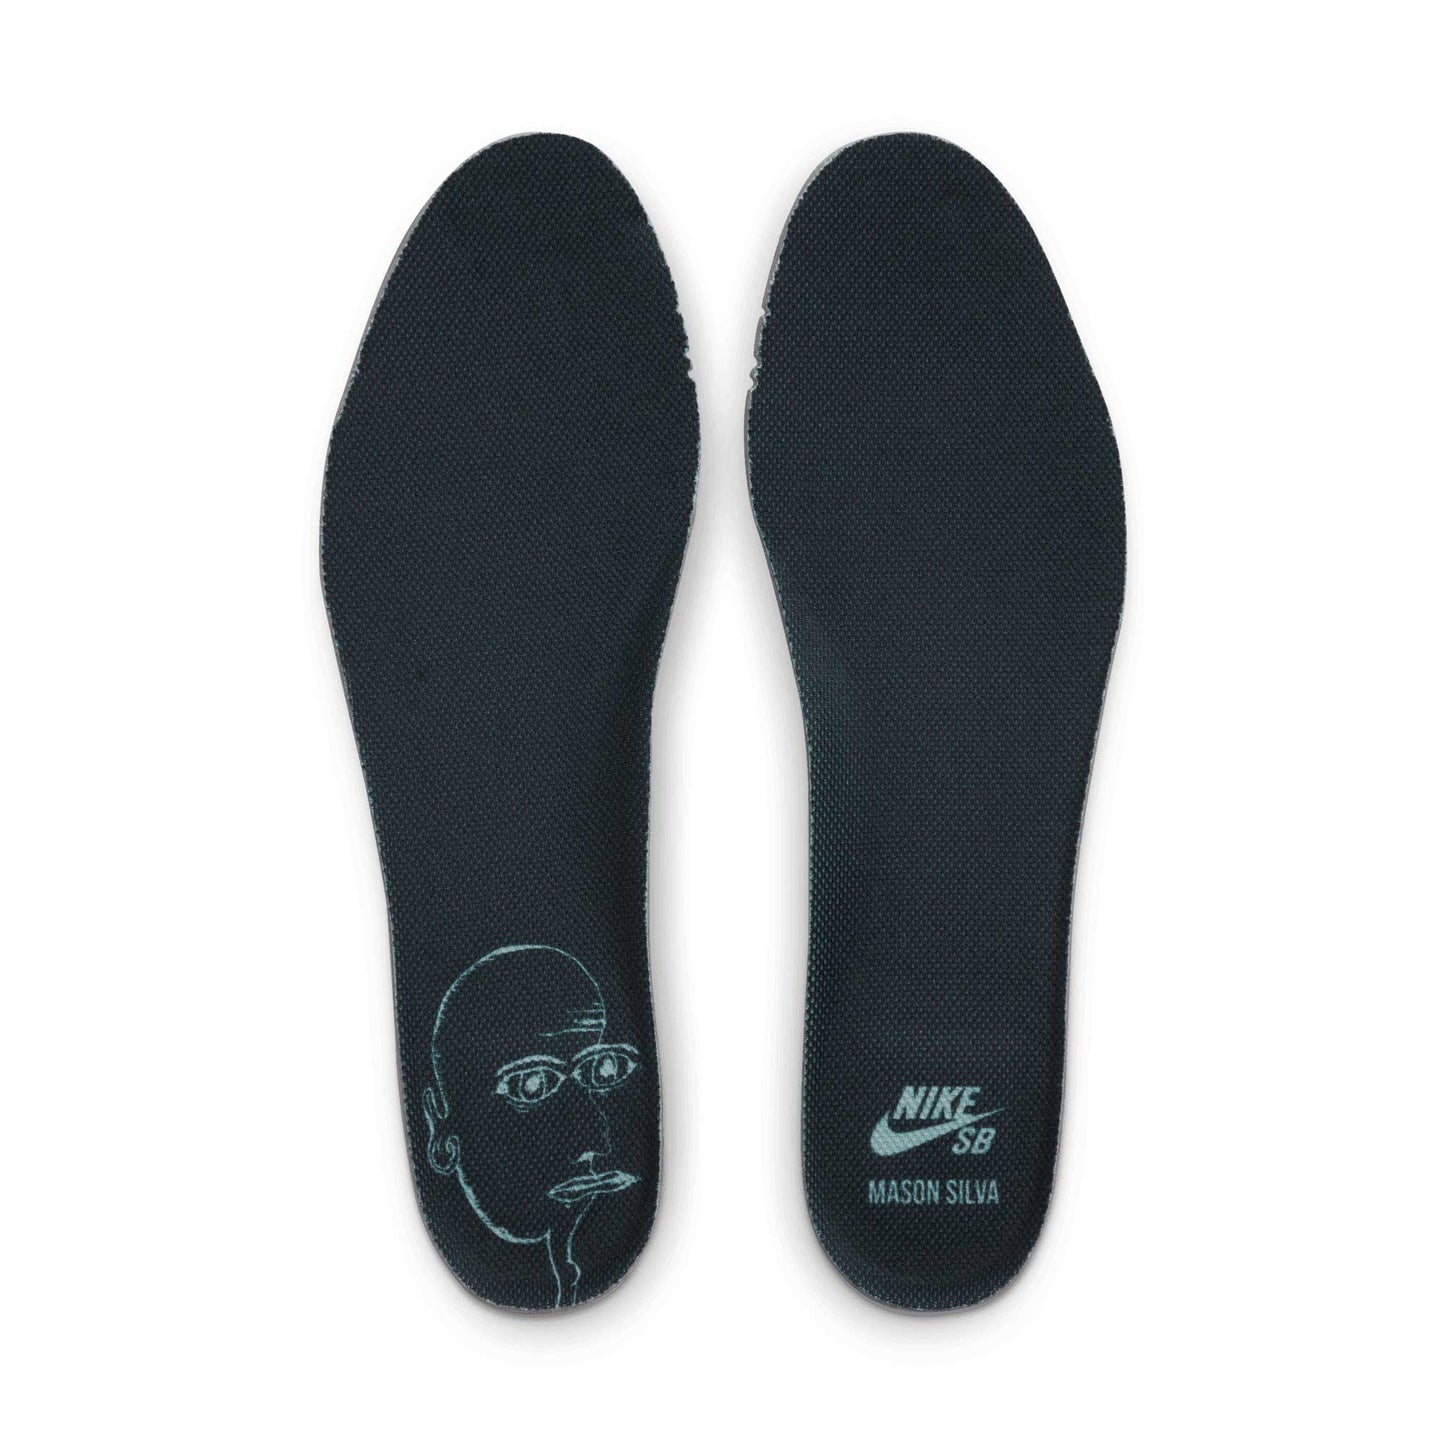 Nike SB Zoom Blazer Mid X Mason Silva, blackened blue/wolf grey-blackened blue - Tiki Room Skateboards - 6